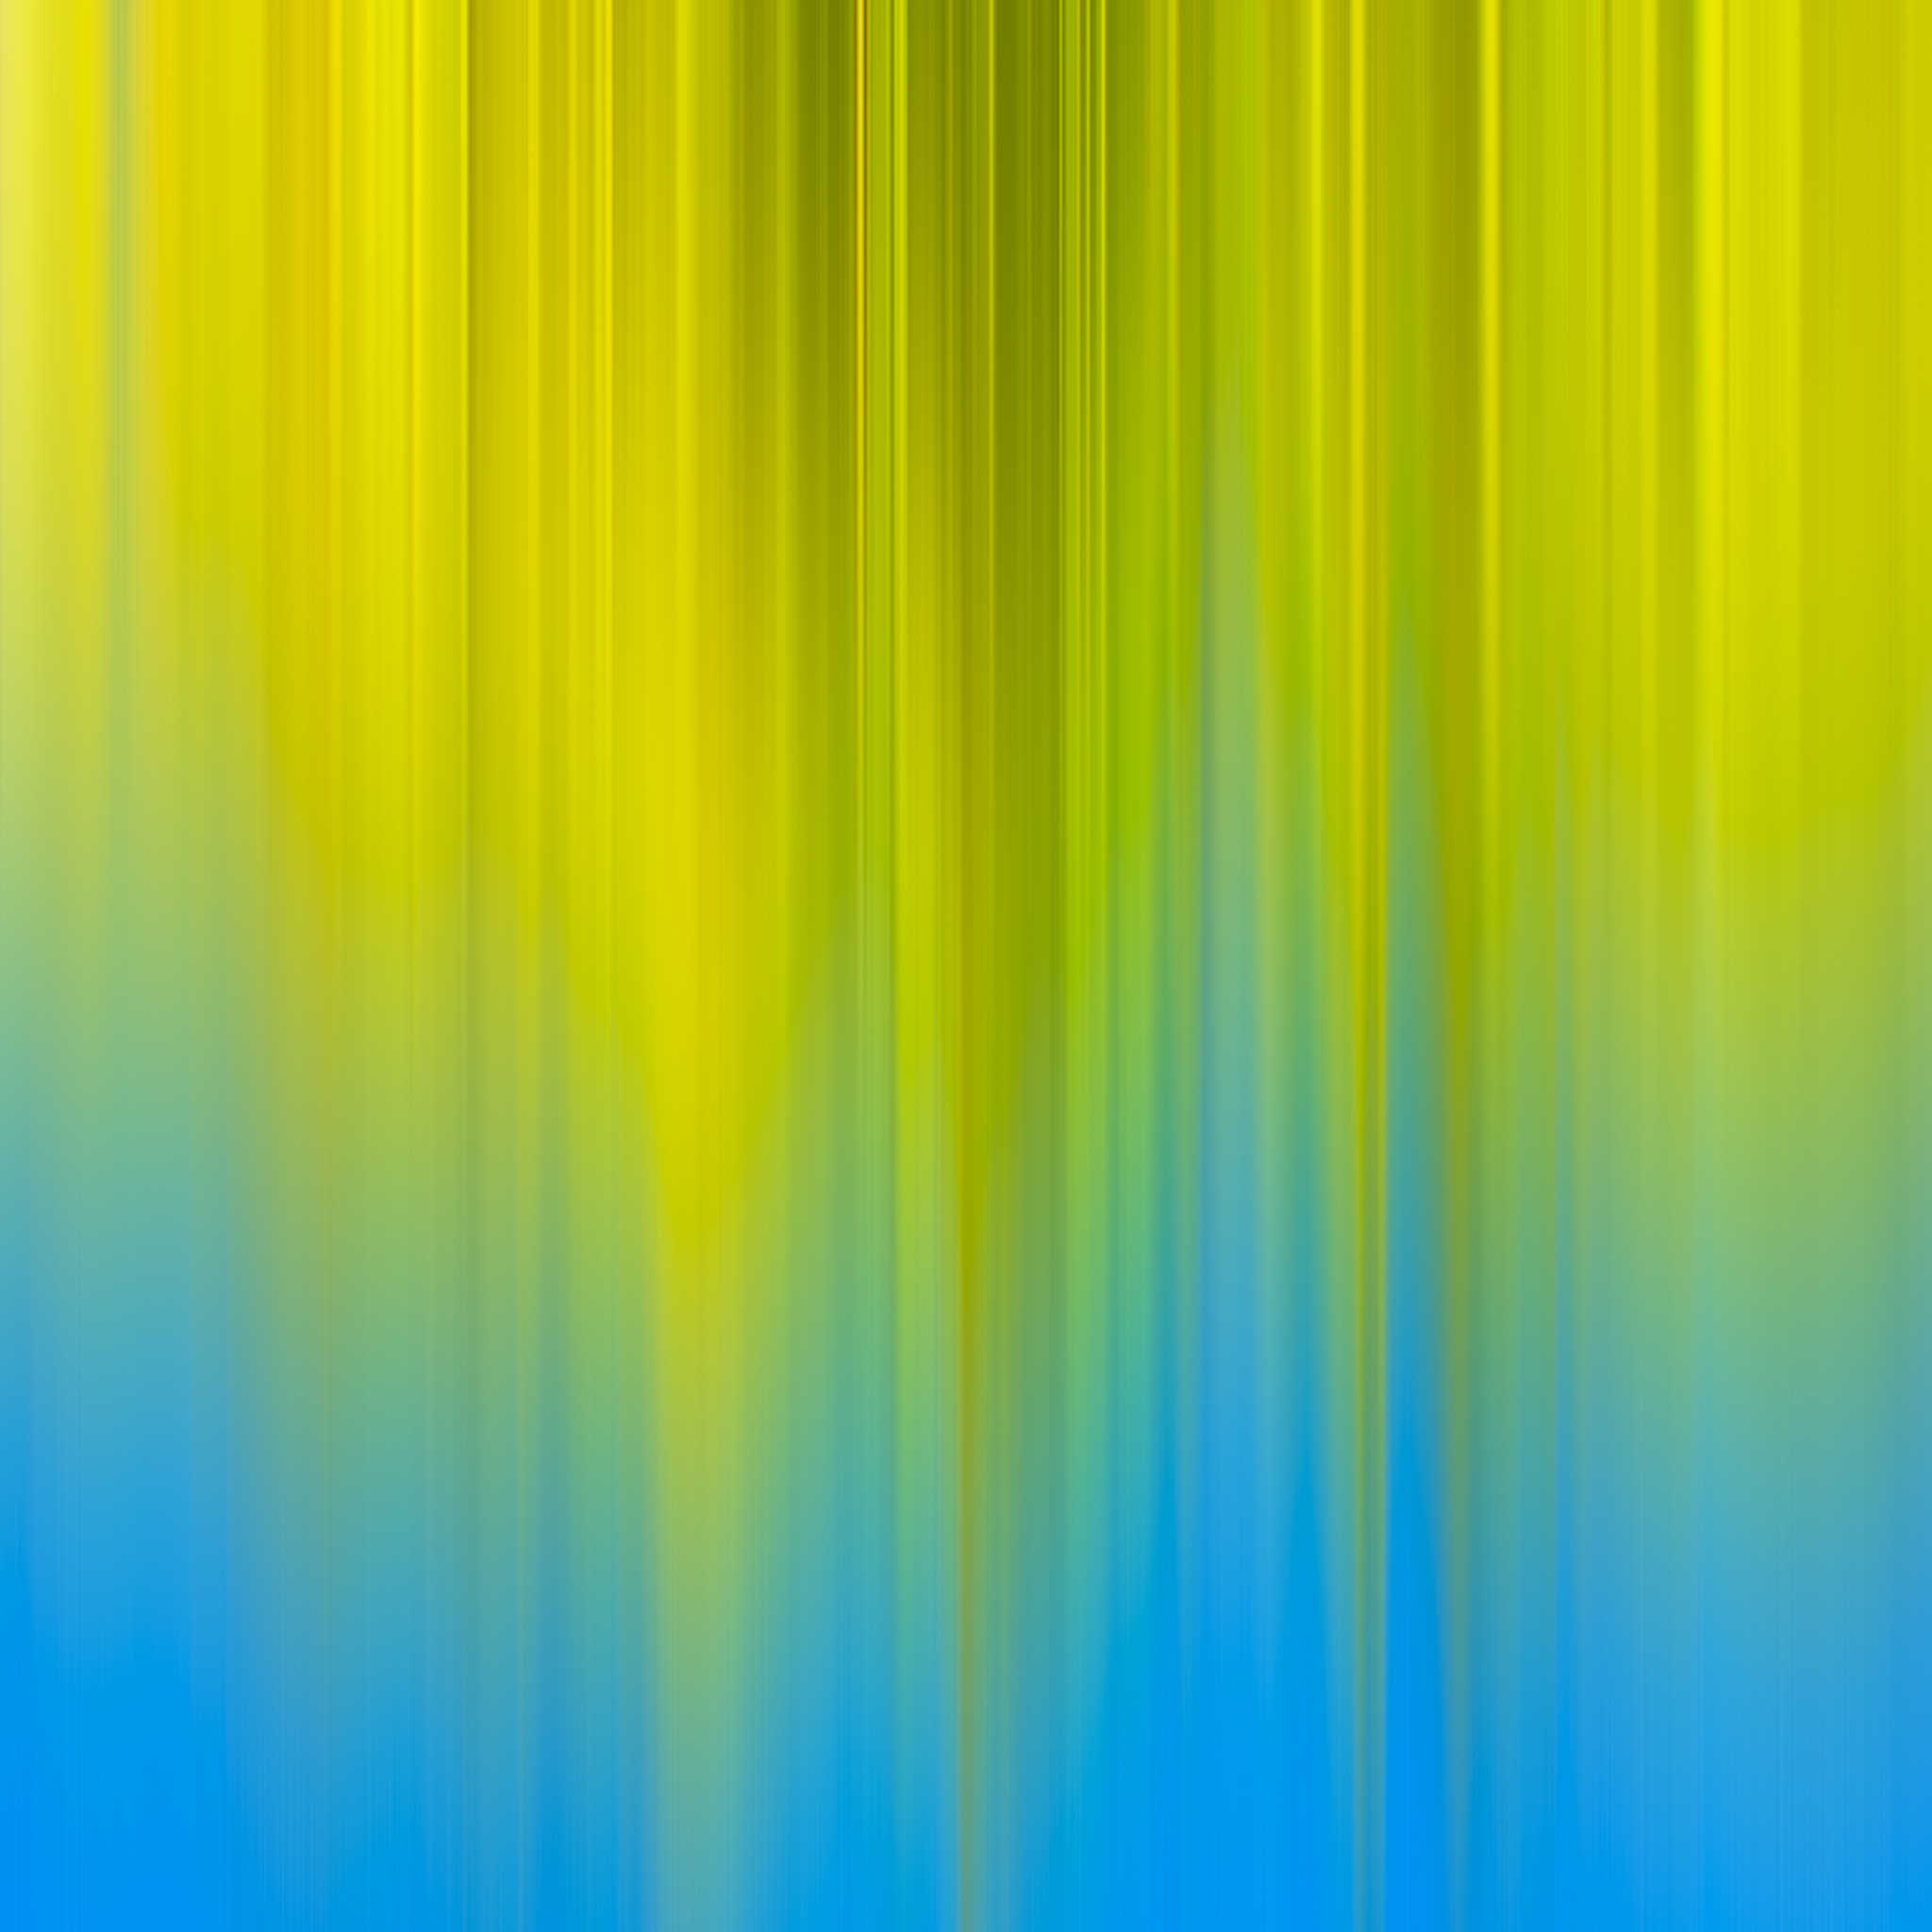 ipad wallpaper hd,blue,green,yellow,turquoise,line